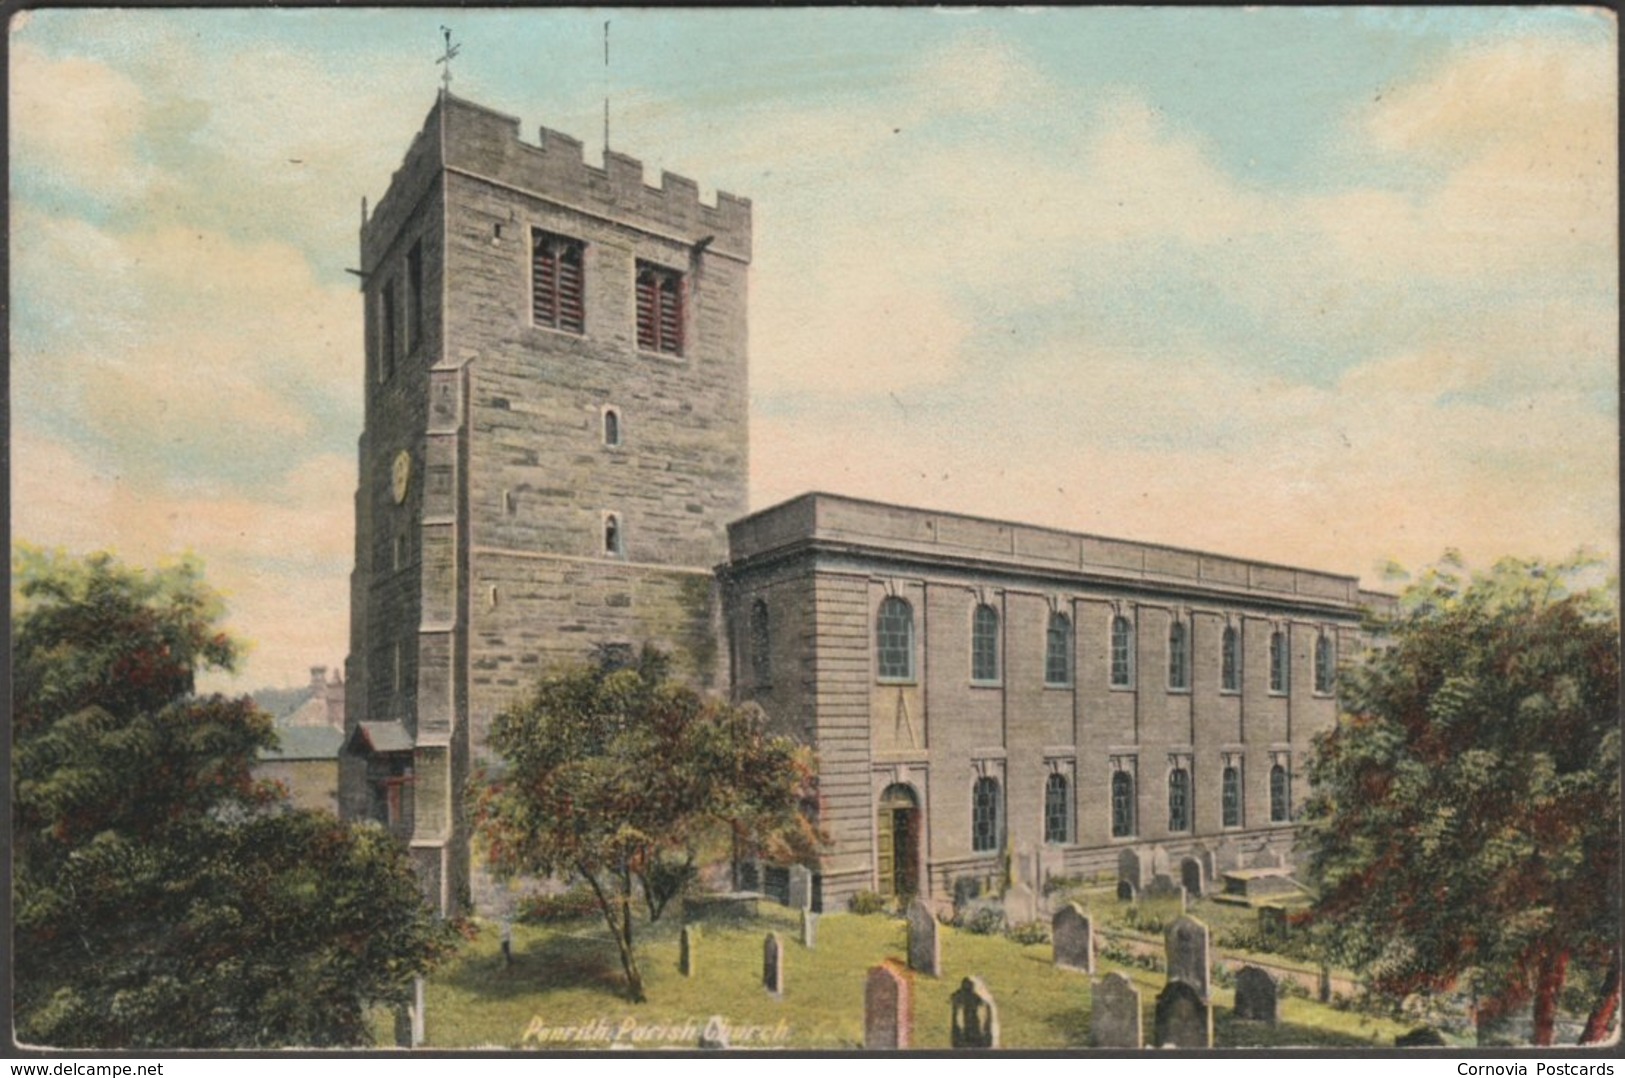 Penrith Parish Church, Cumberland, C.1905-10 - Davidson Bros Postcard - Penrith